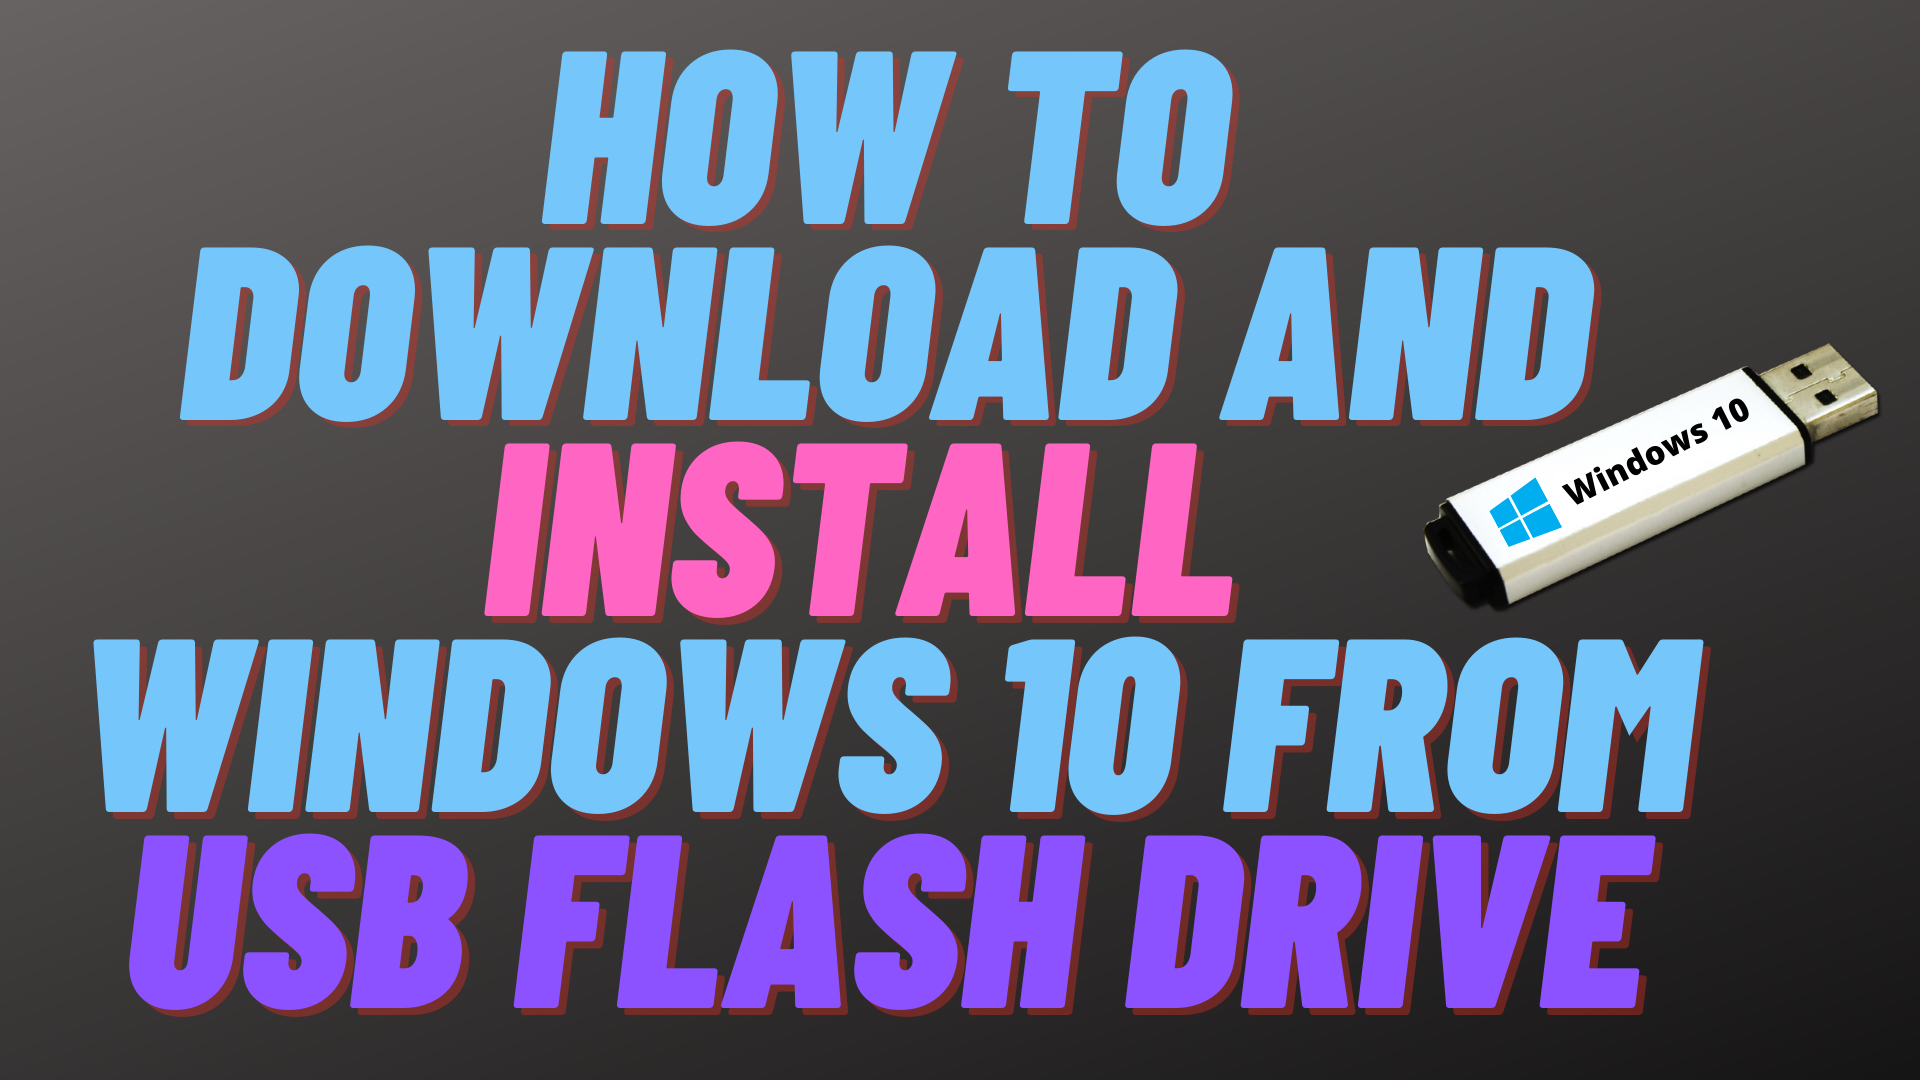 windows 10 usb installer download